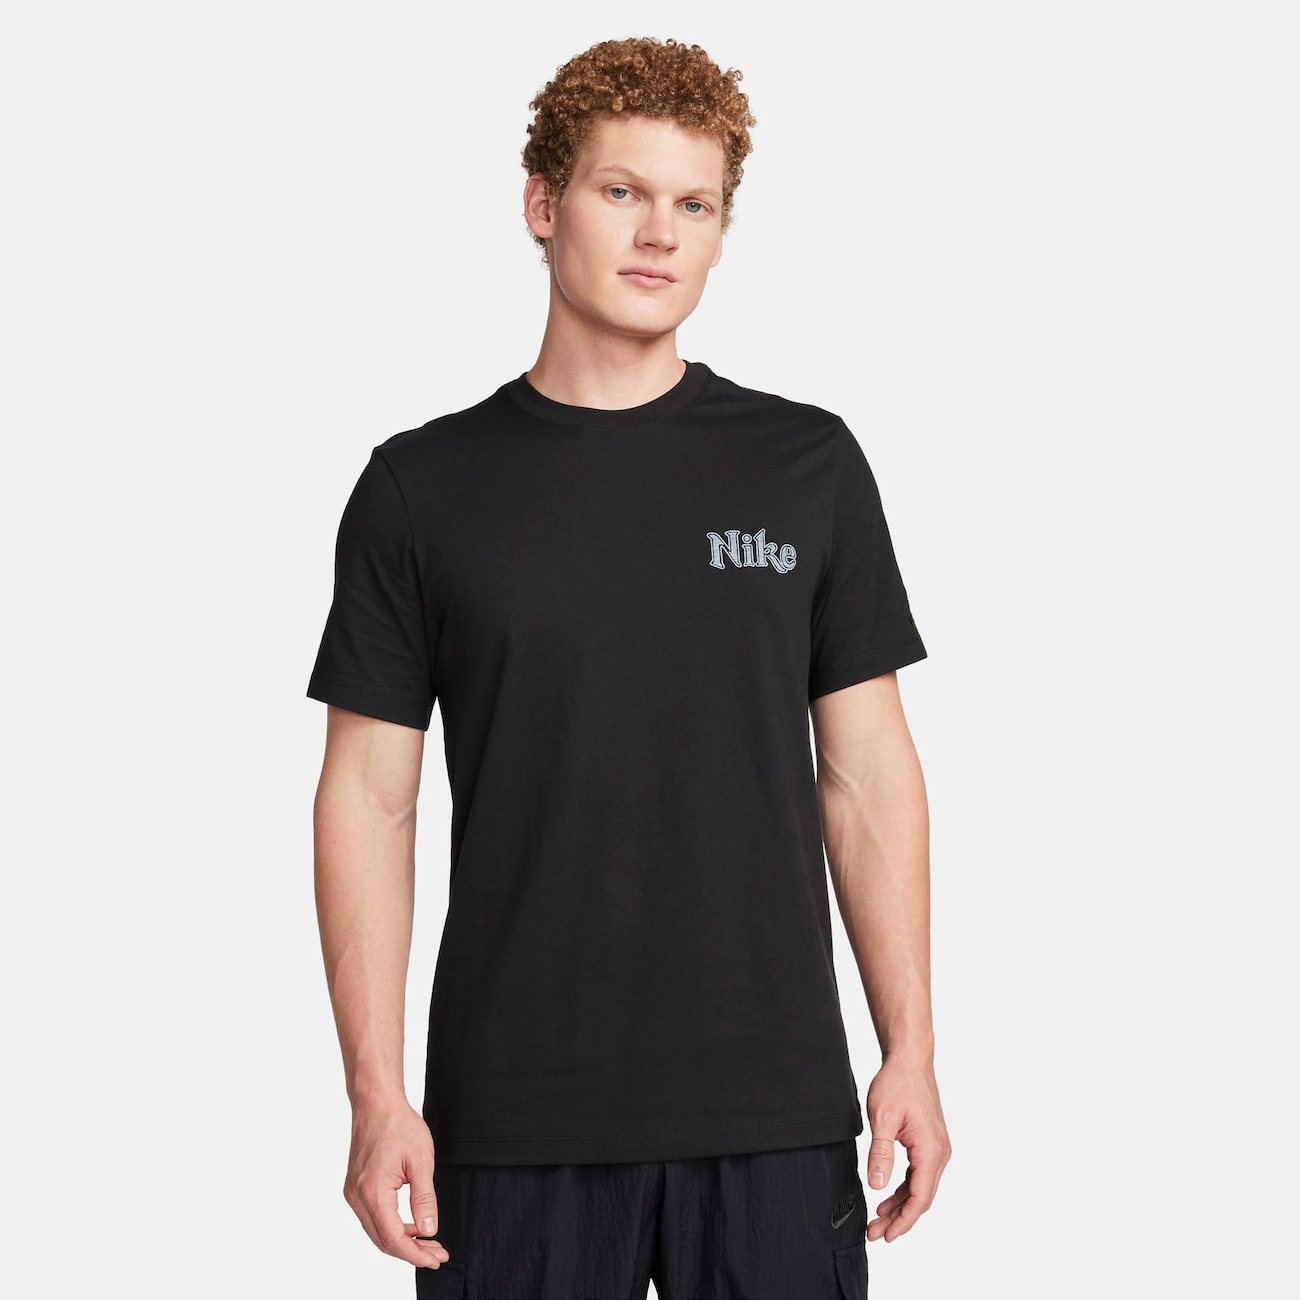 Camiseta Nike Sportswear Masculina